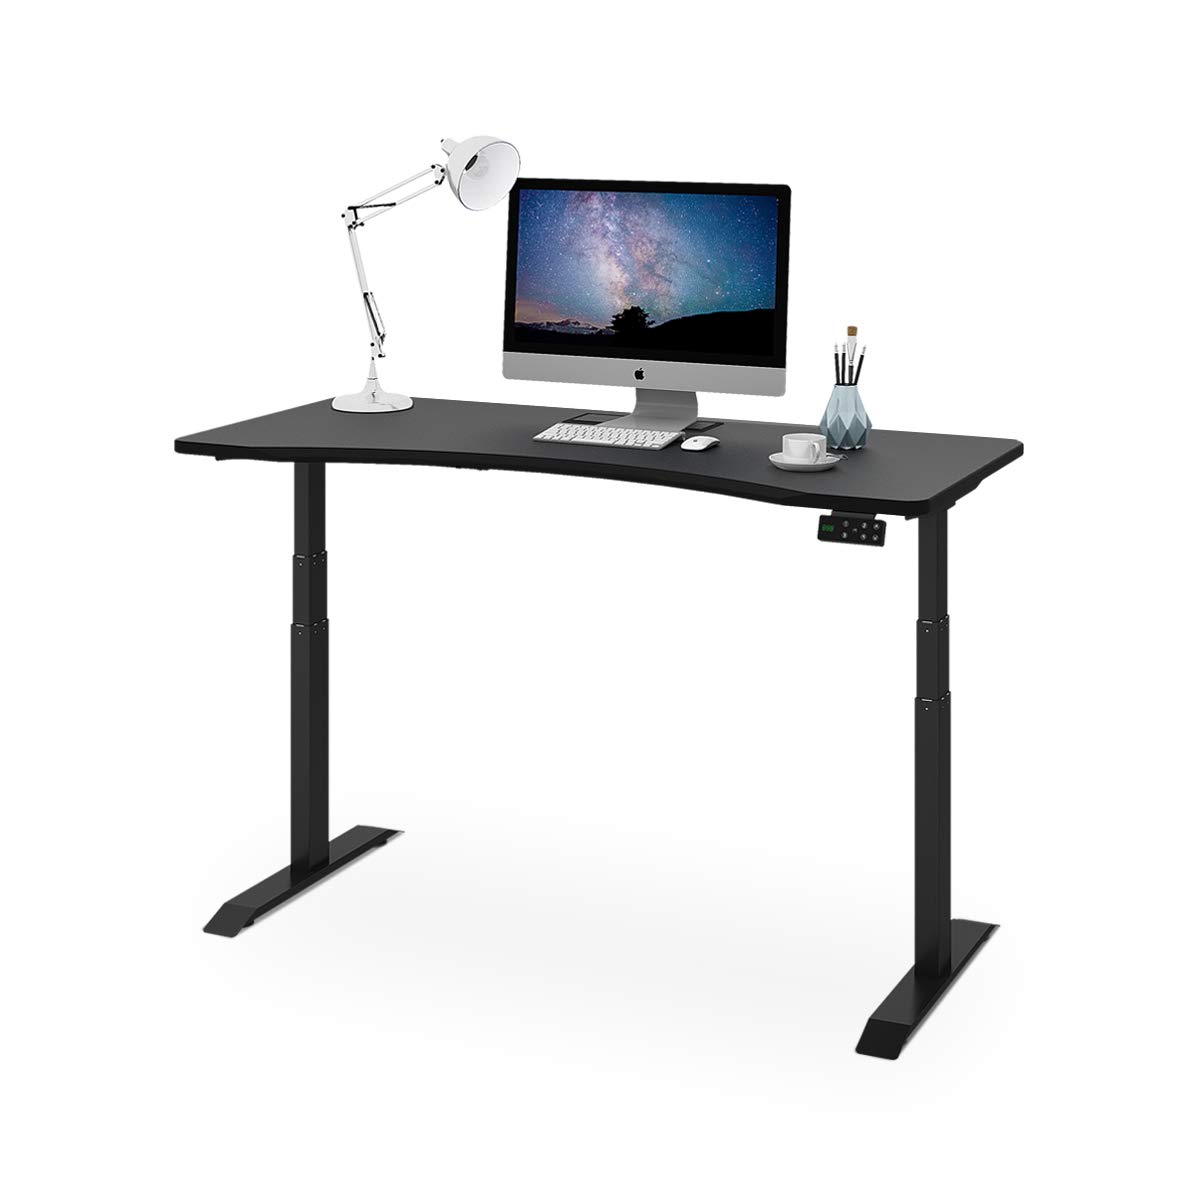 Jiecang Base - Diy standing desk idea